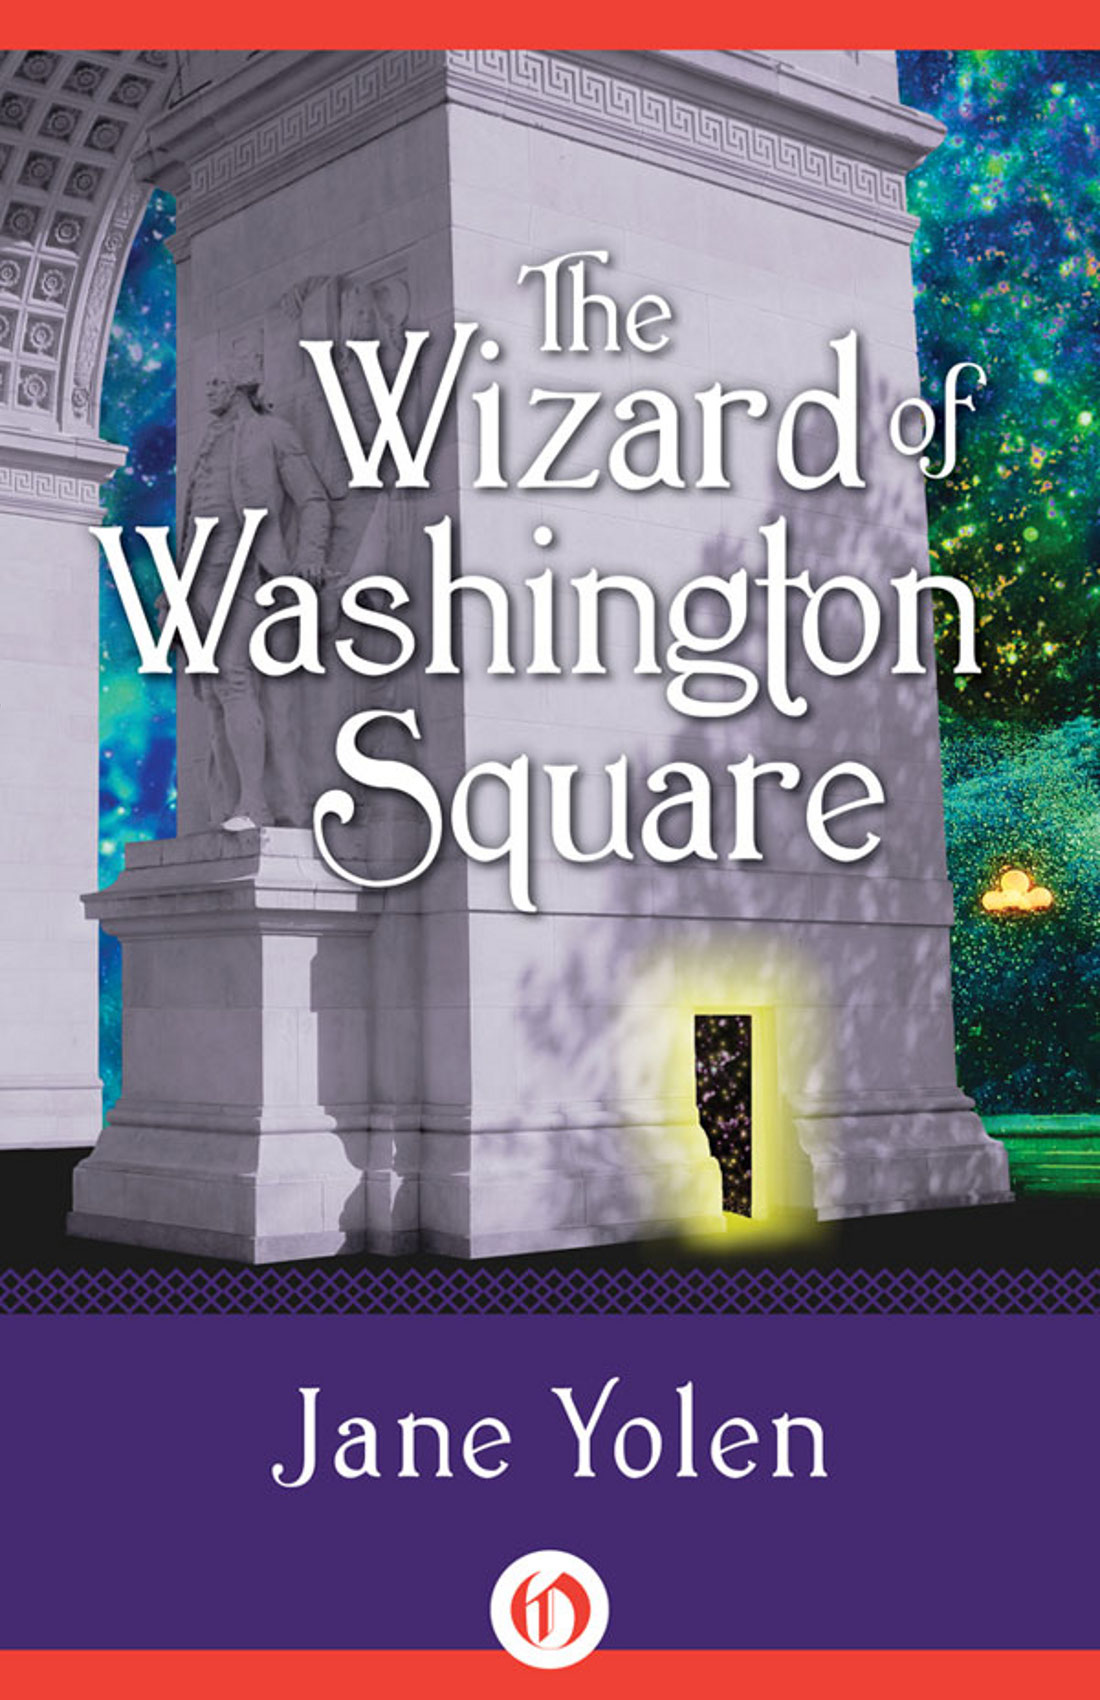 Wizard of Washington Square by Jane Yolen